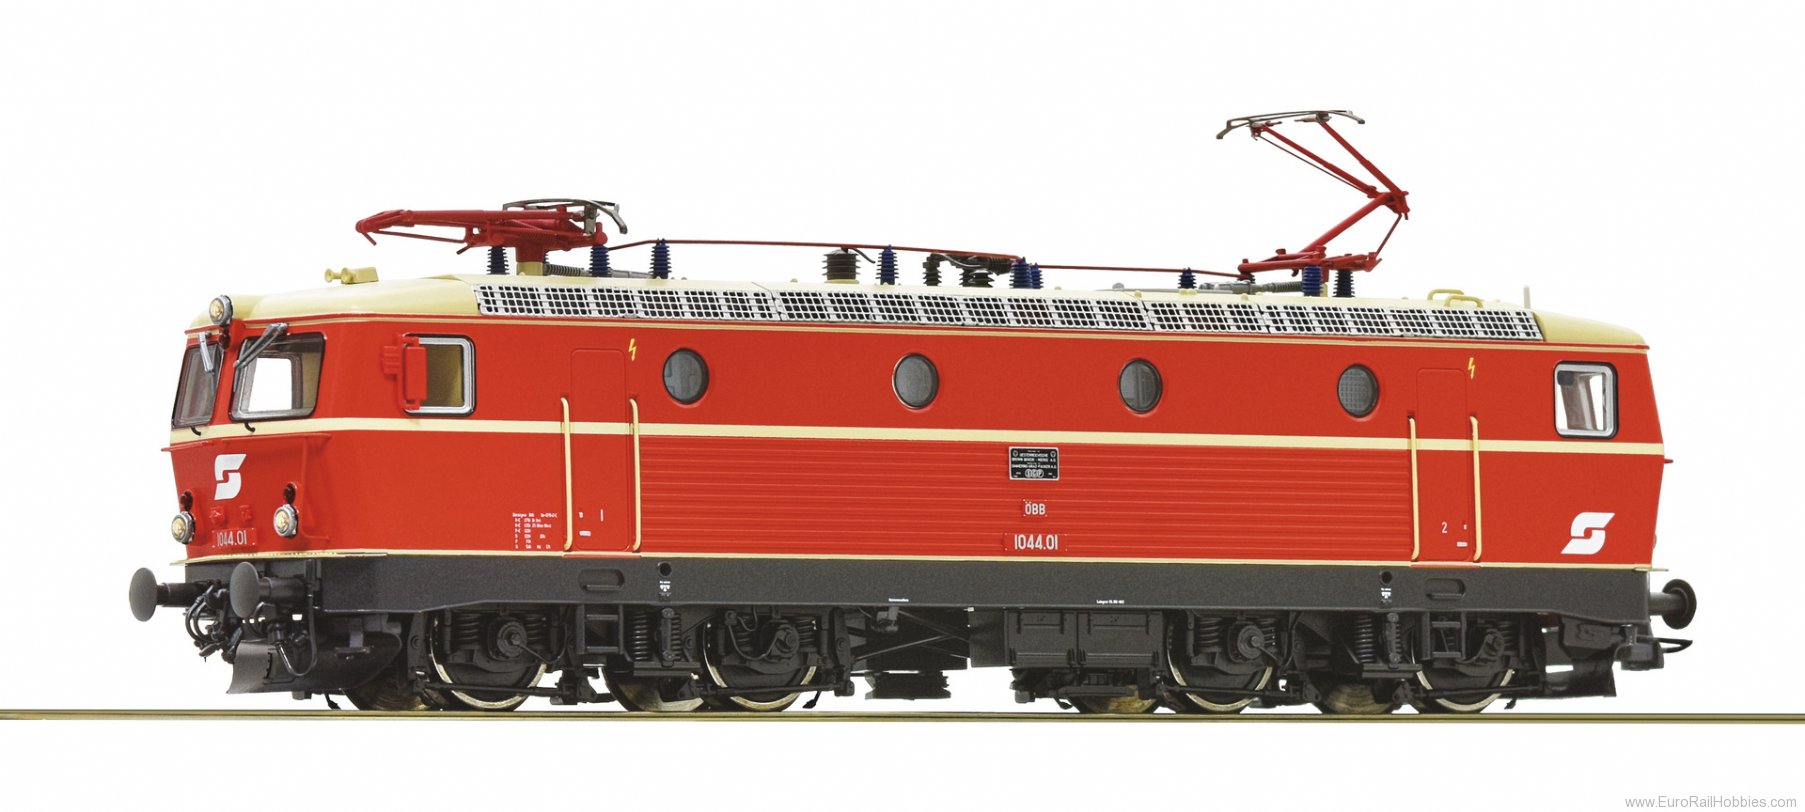 Roco 70433 OBB Electric locomotive 1044.01,